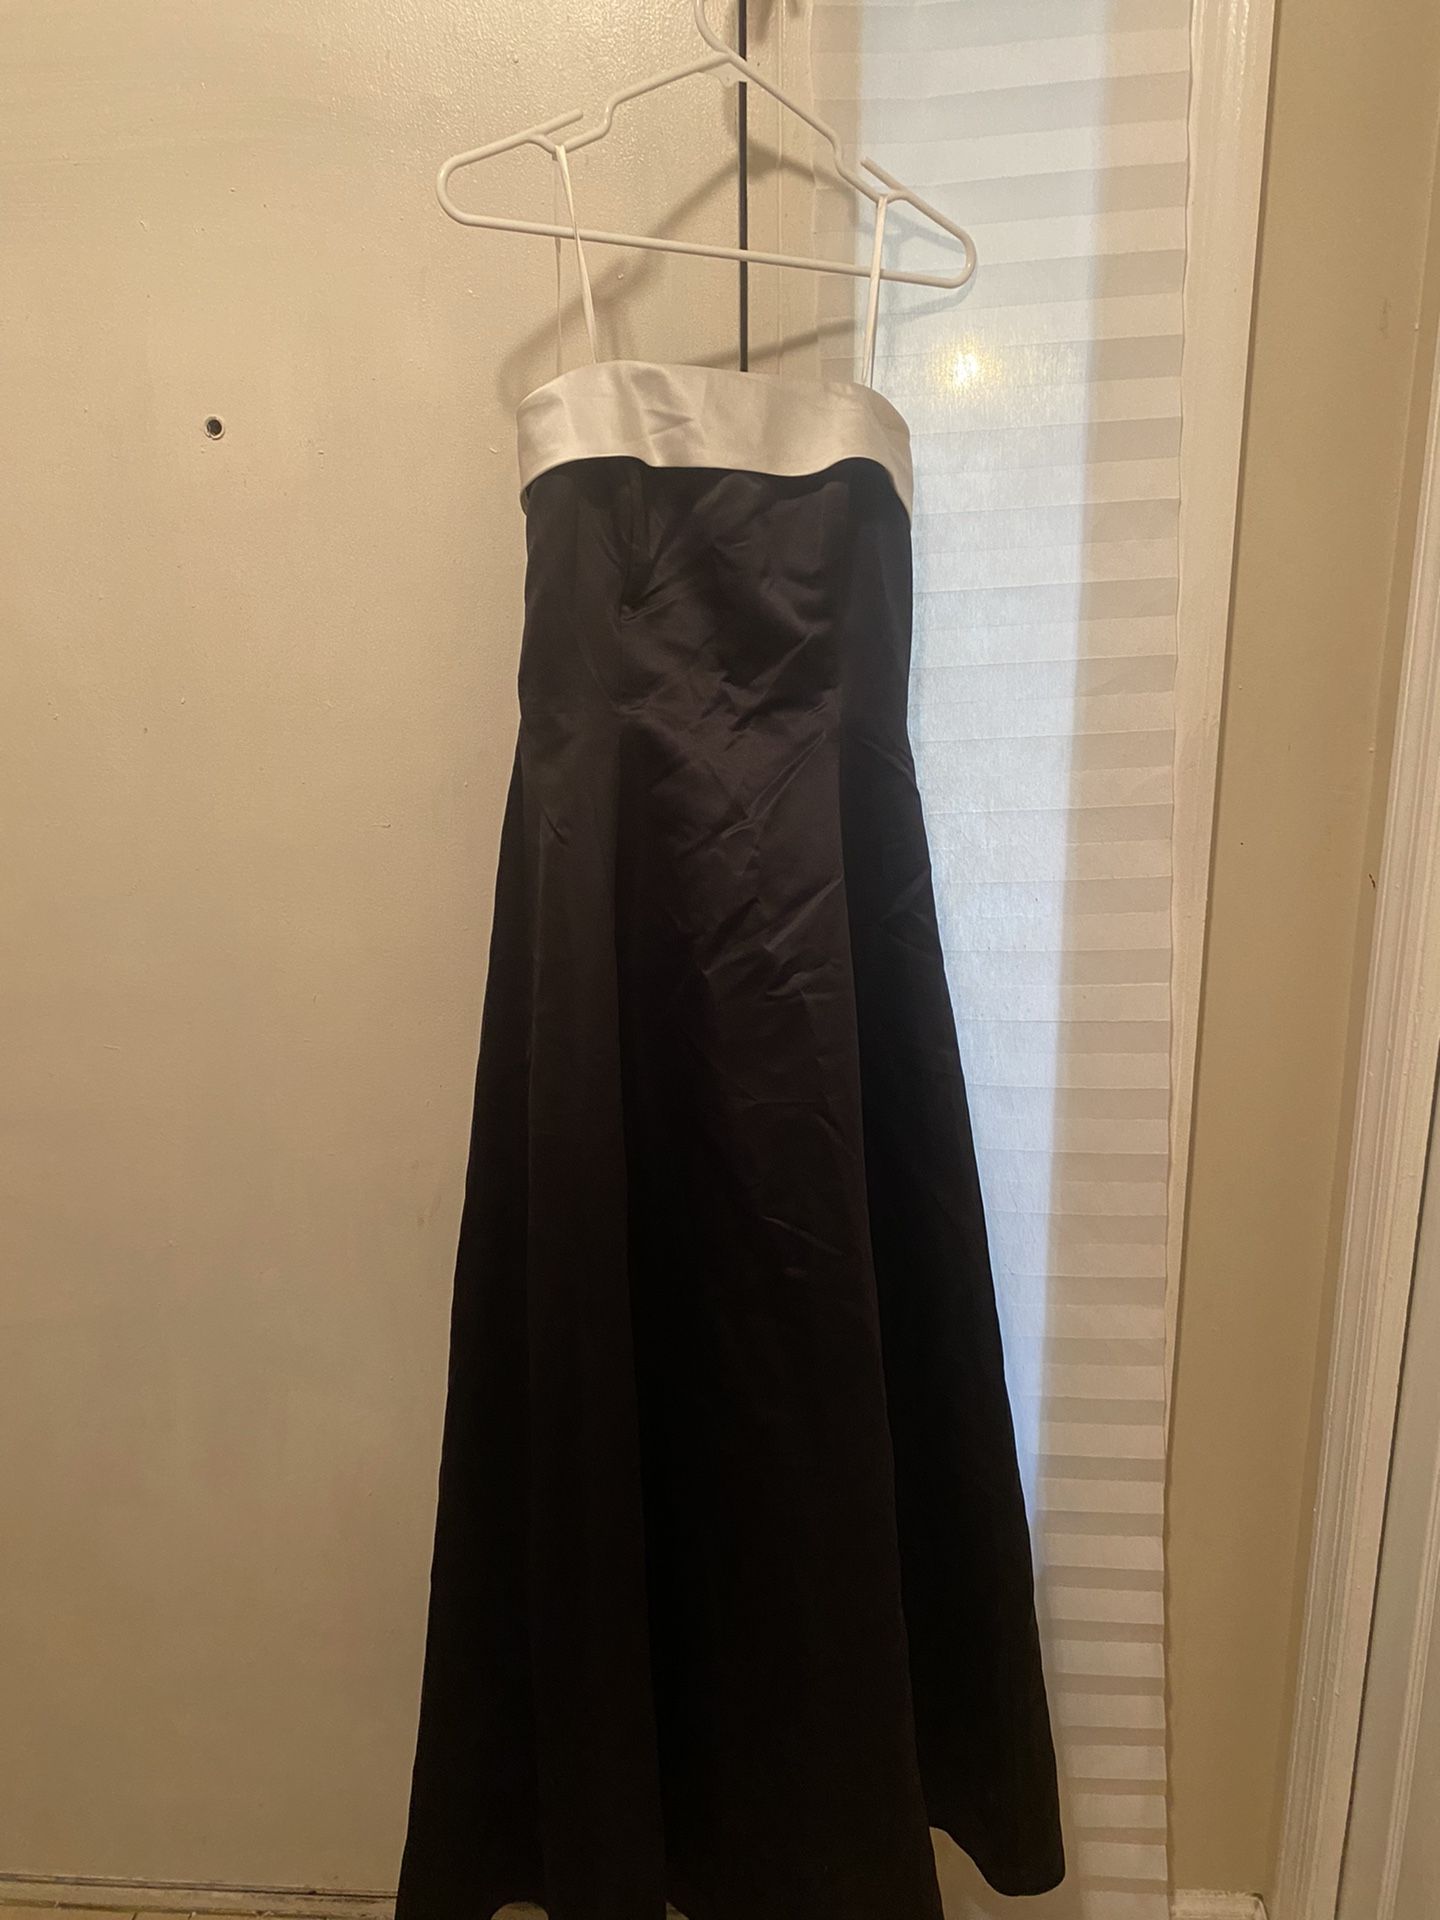 Like New Homecoming /Prom Dress Black & White with Shawl. Size Medium $10 FCFS